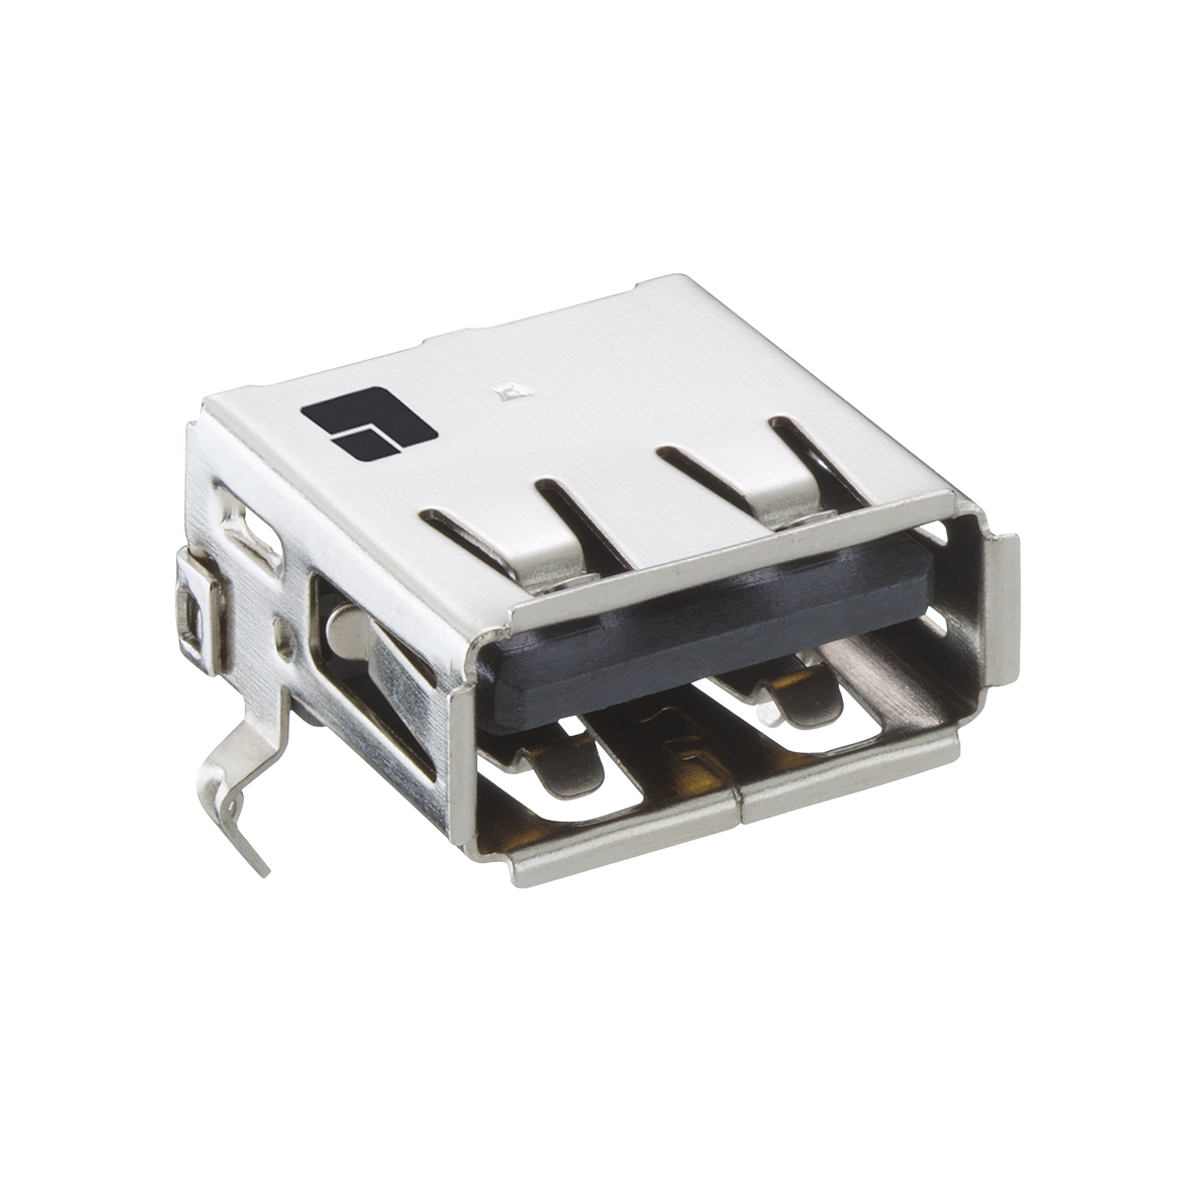 Lumberg: 2410 14 (Series 24 | USB and IEEE 1394 connectors)